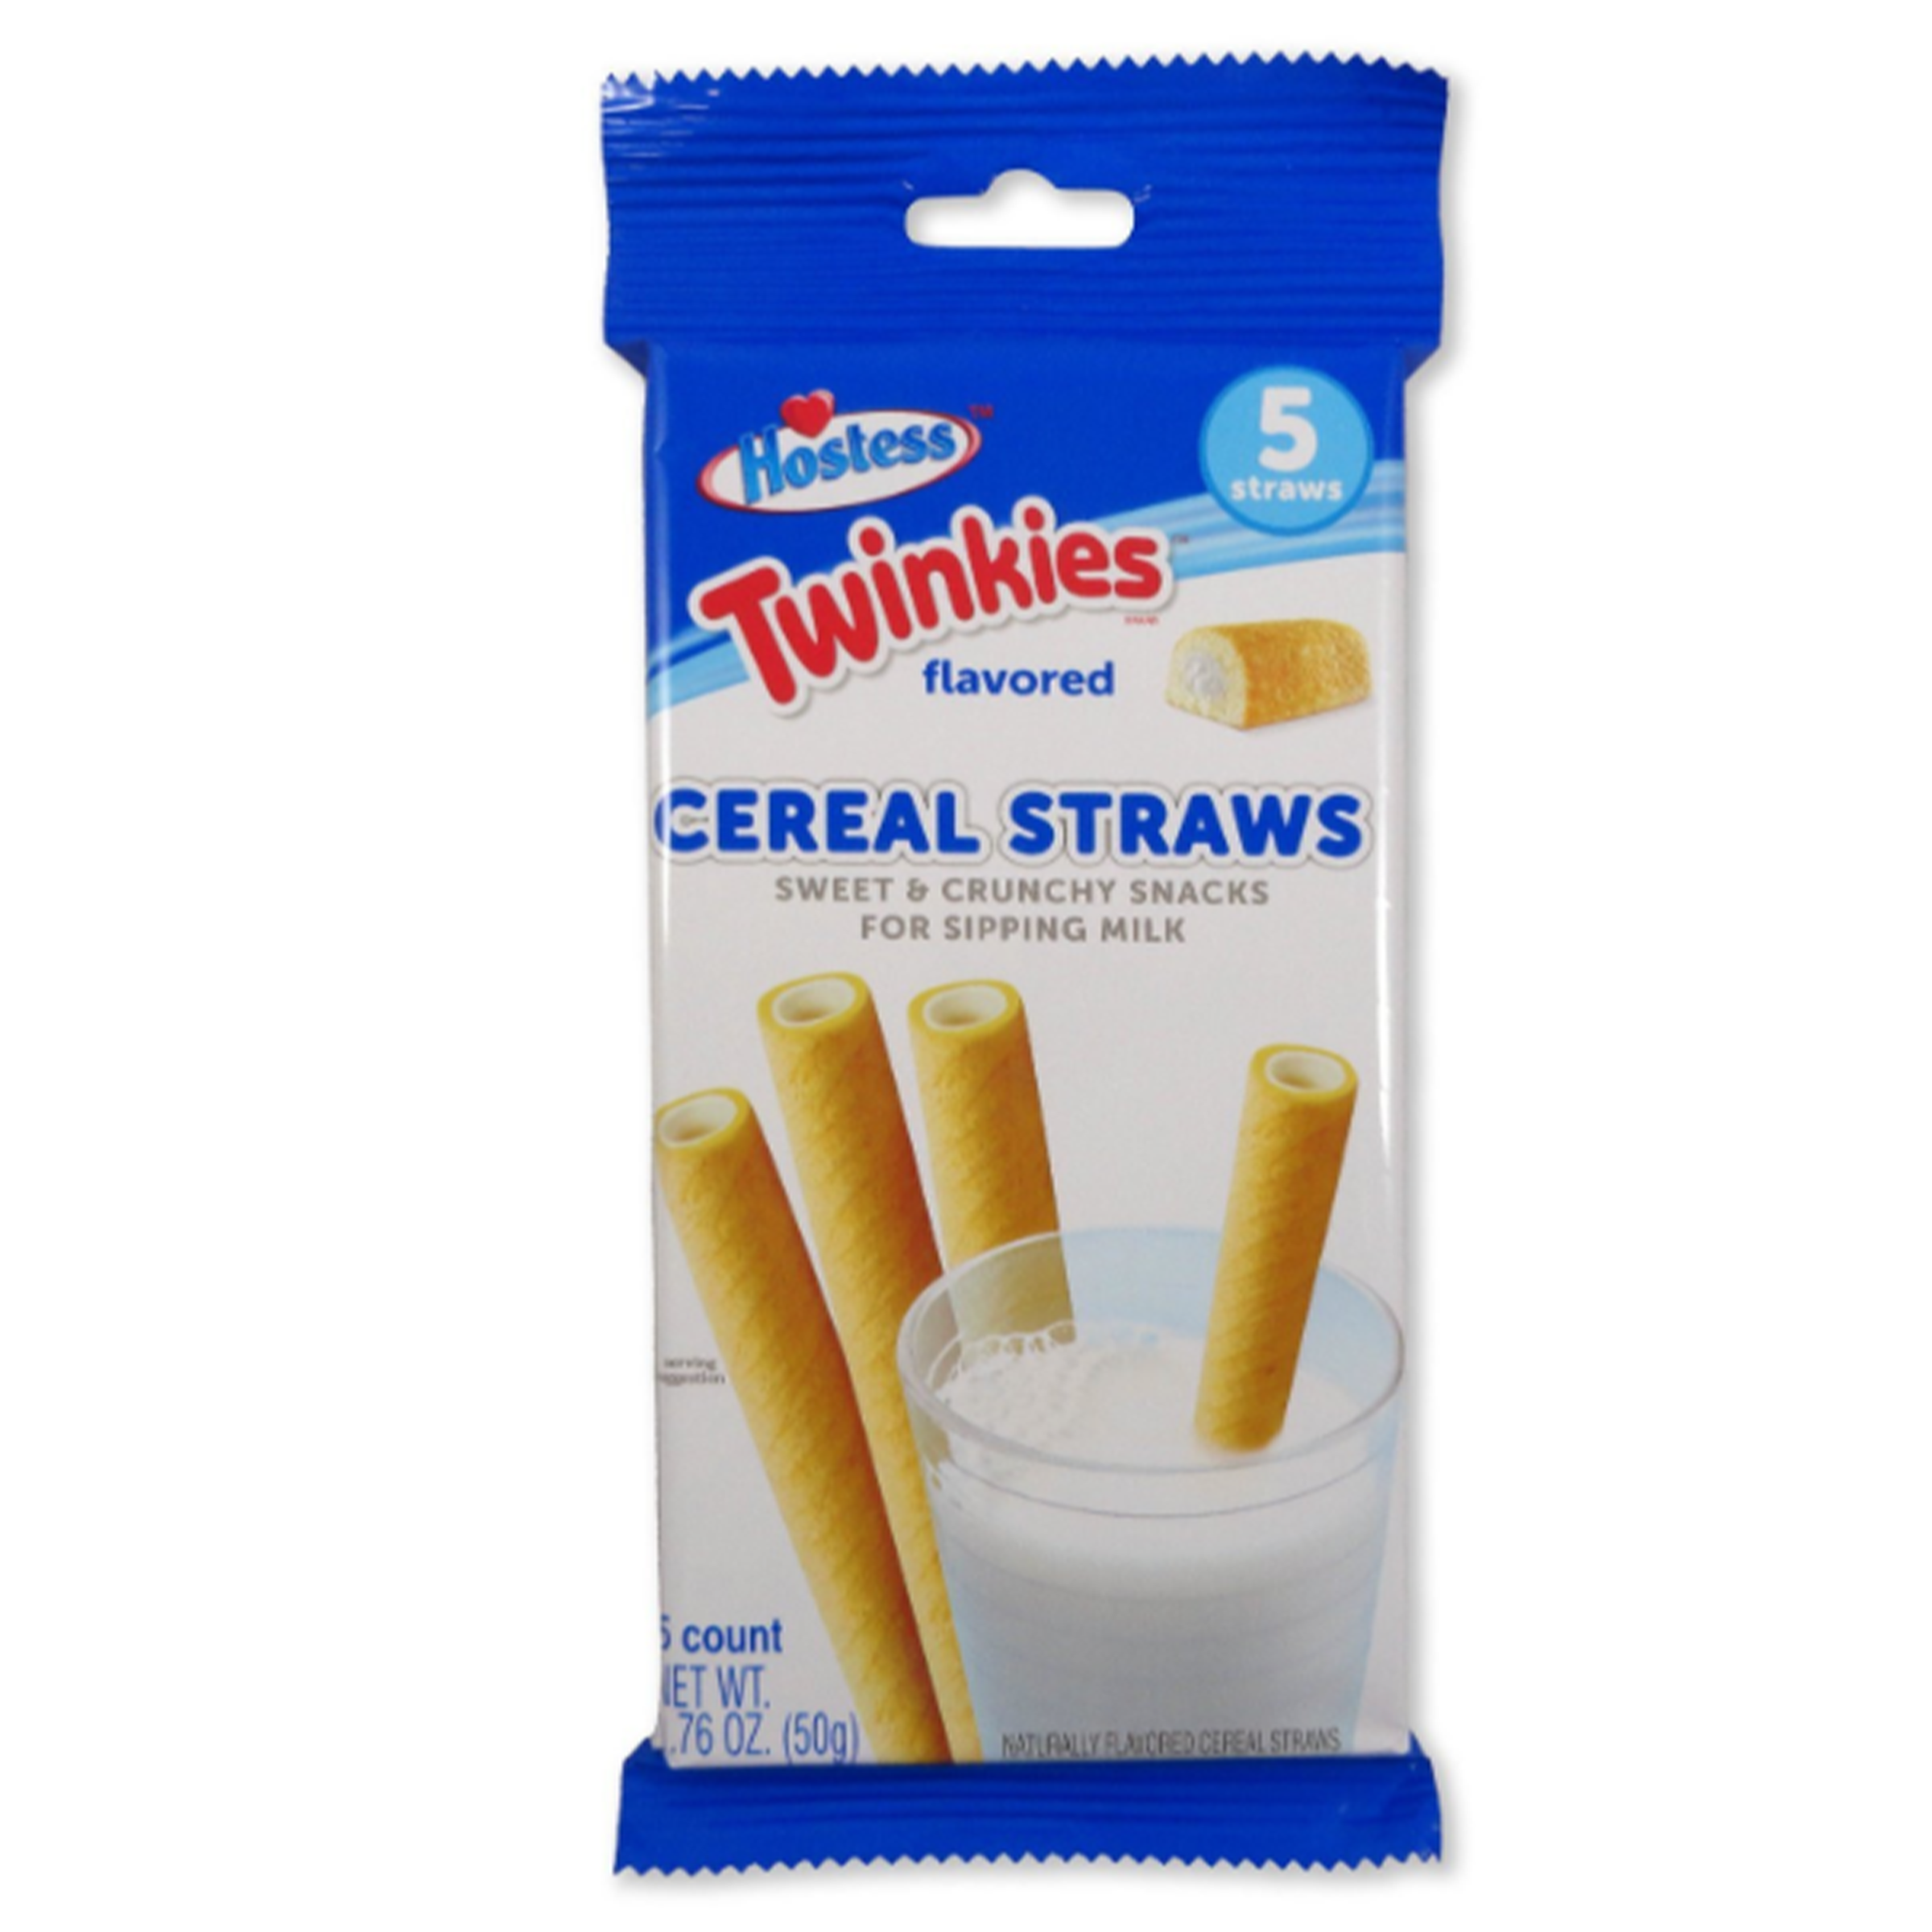 Hostess Twinkies Cereal Straws